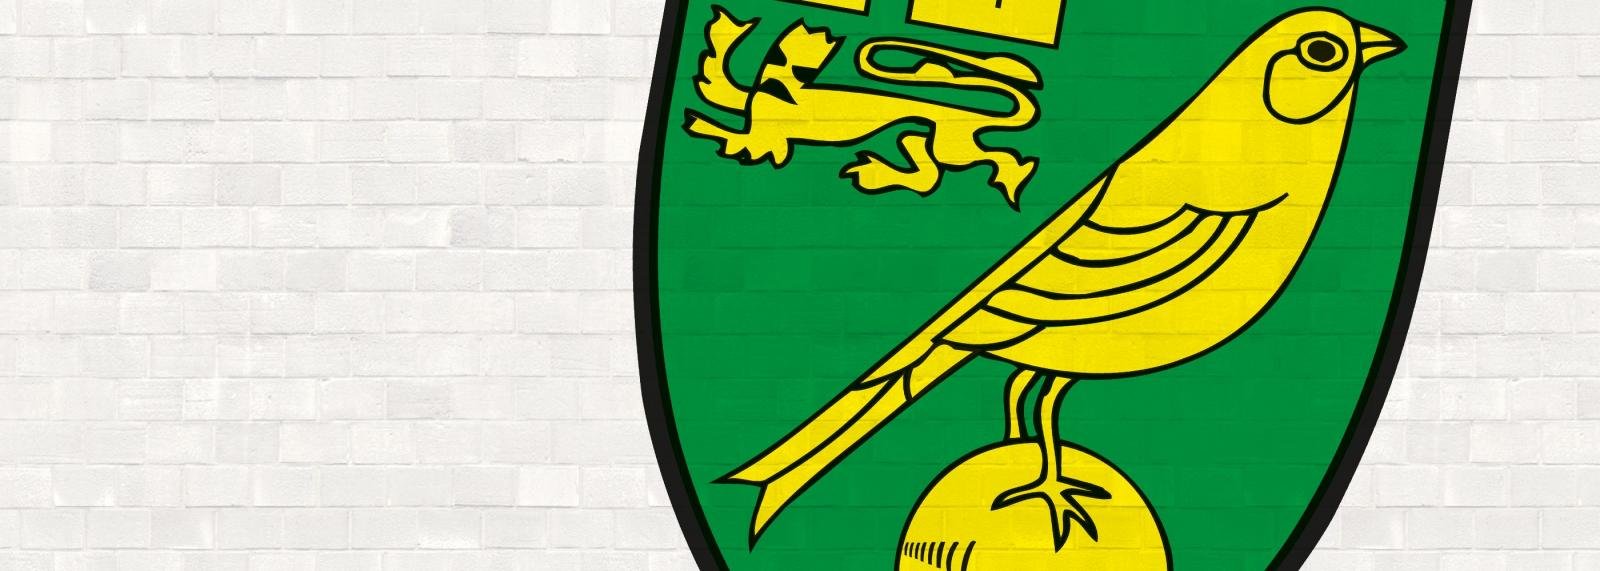 Norwich launch loan bid for Premier League title contenders’ €8m summer signing